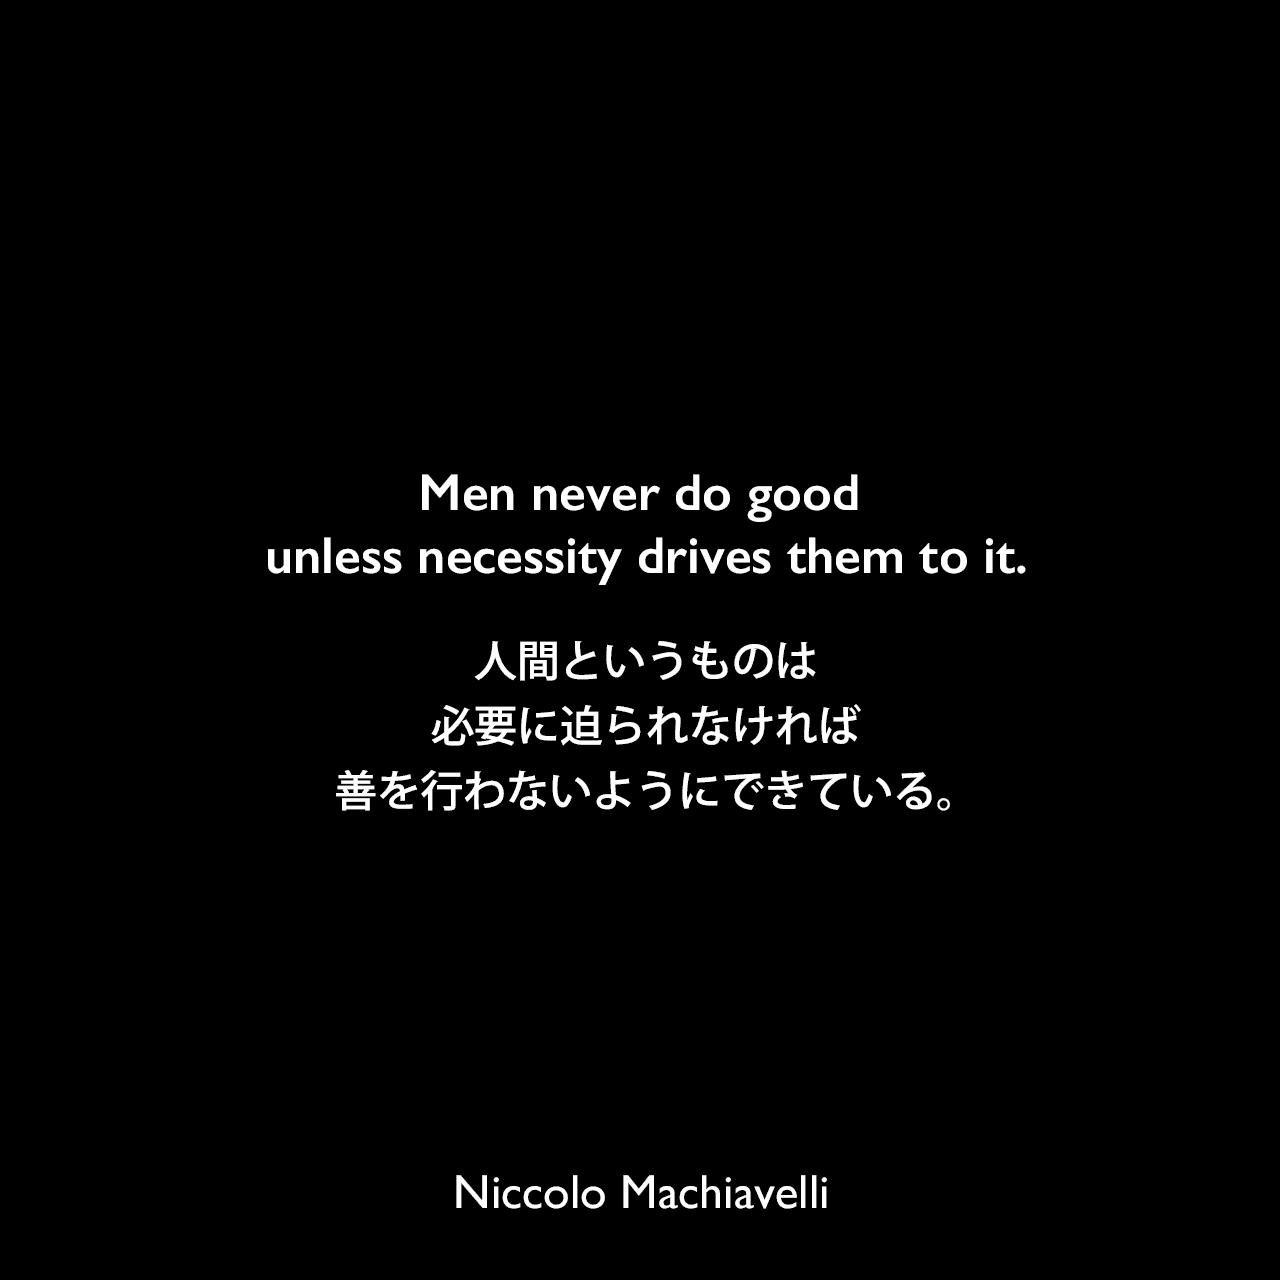 Men never do good unless necessity drives them to it.人間というものは、必要に迫られなければ善を行わないようにできている。Niccolo Machiavelli